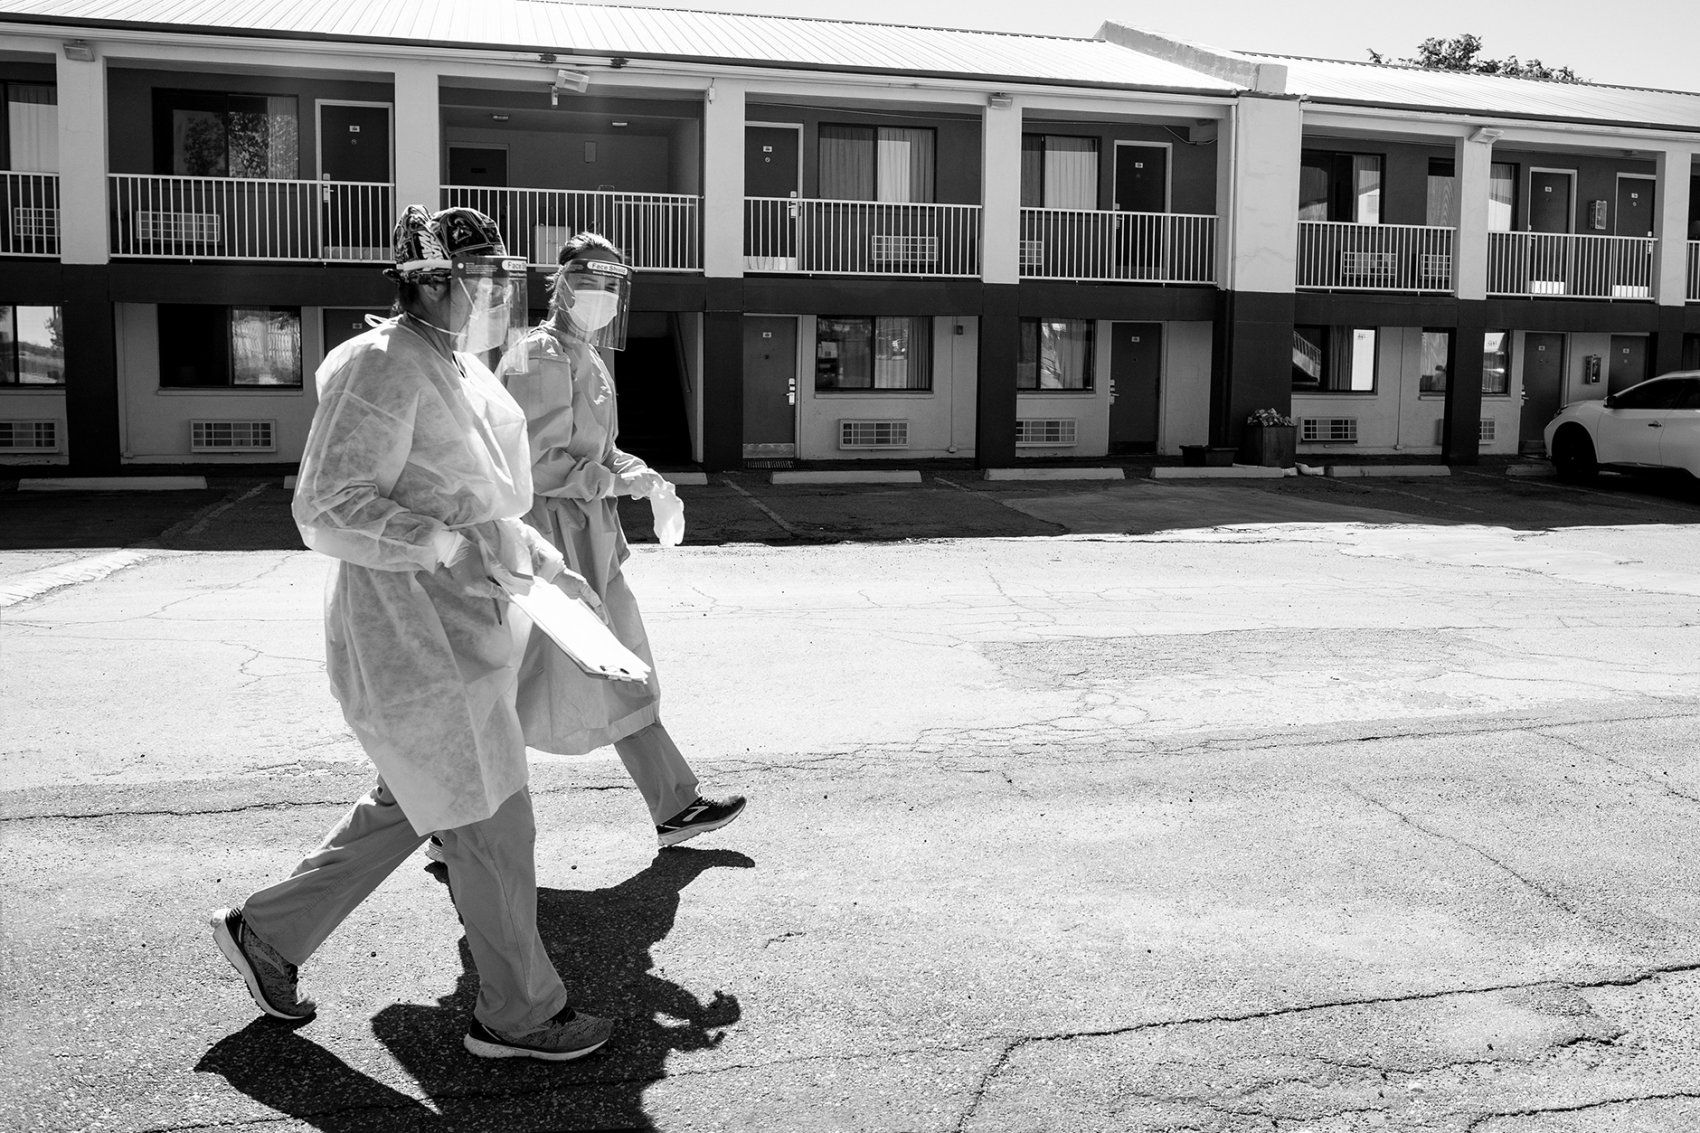 medical workers walk across a motel parking lot